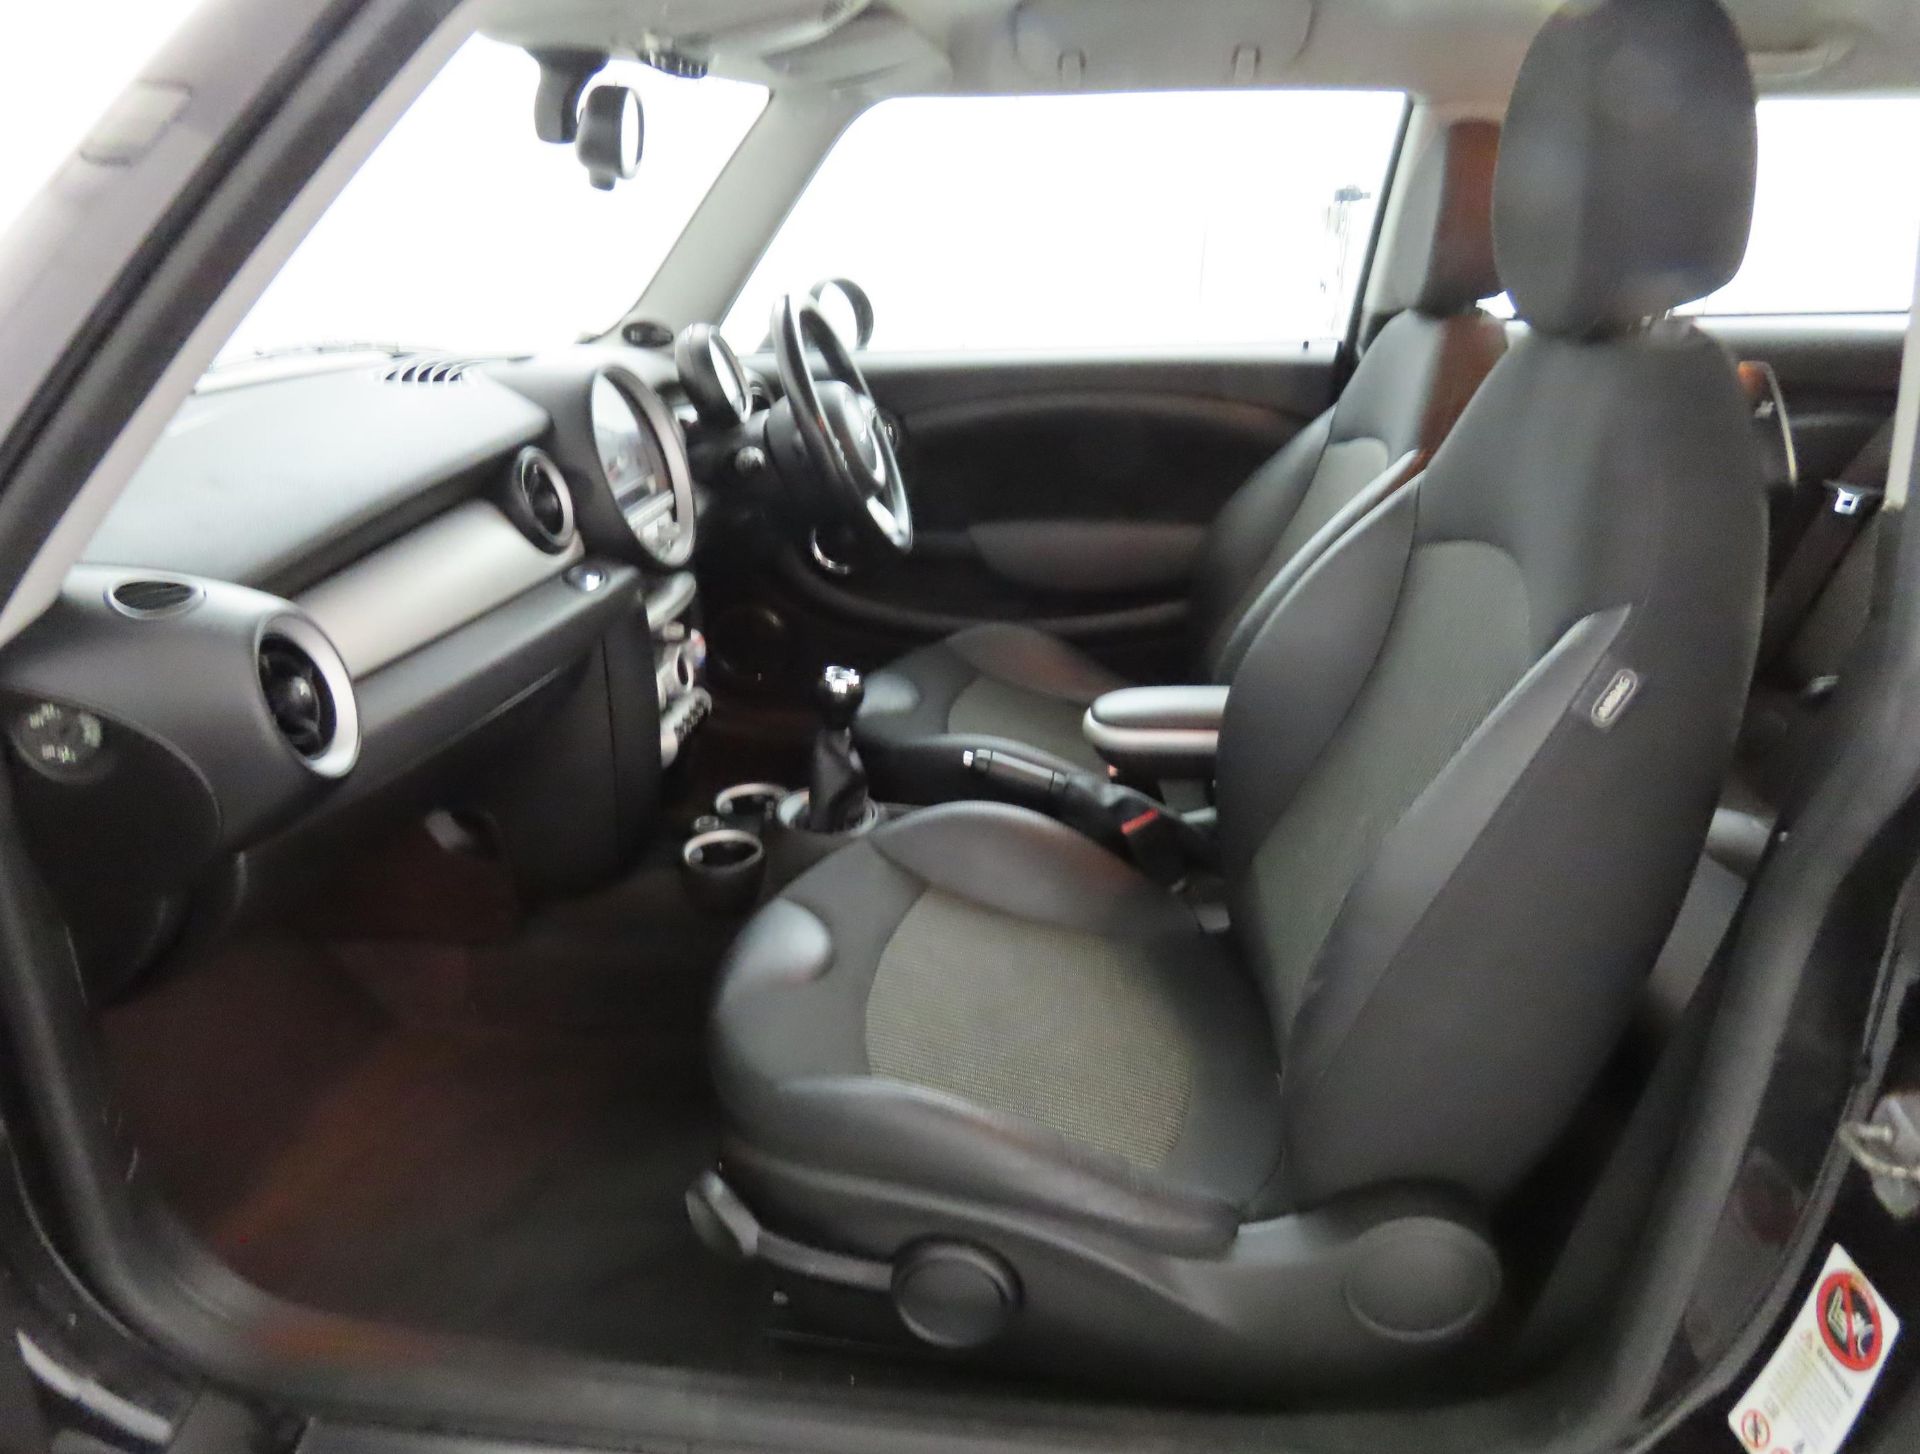 2010 Mini Cooper 1.6 3 Door Hatchback - CL505 - NO VAT ON THE HAMMER - Location: Corby, - Image 9 of 12